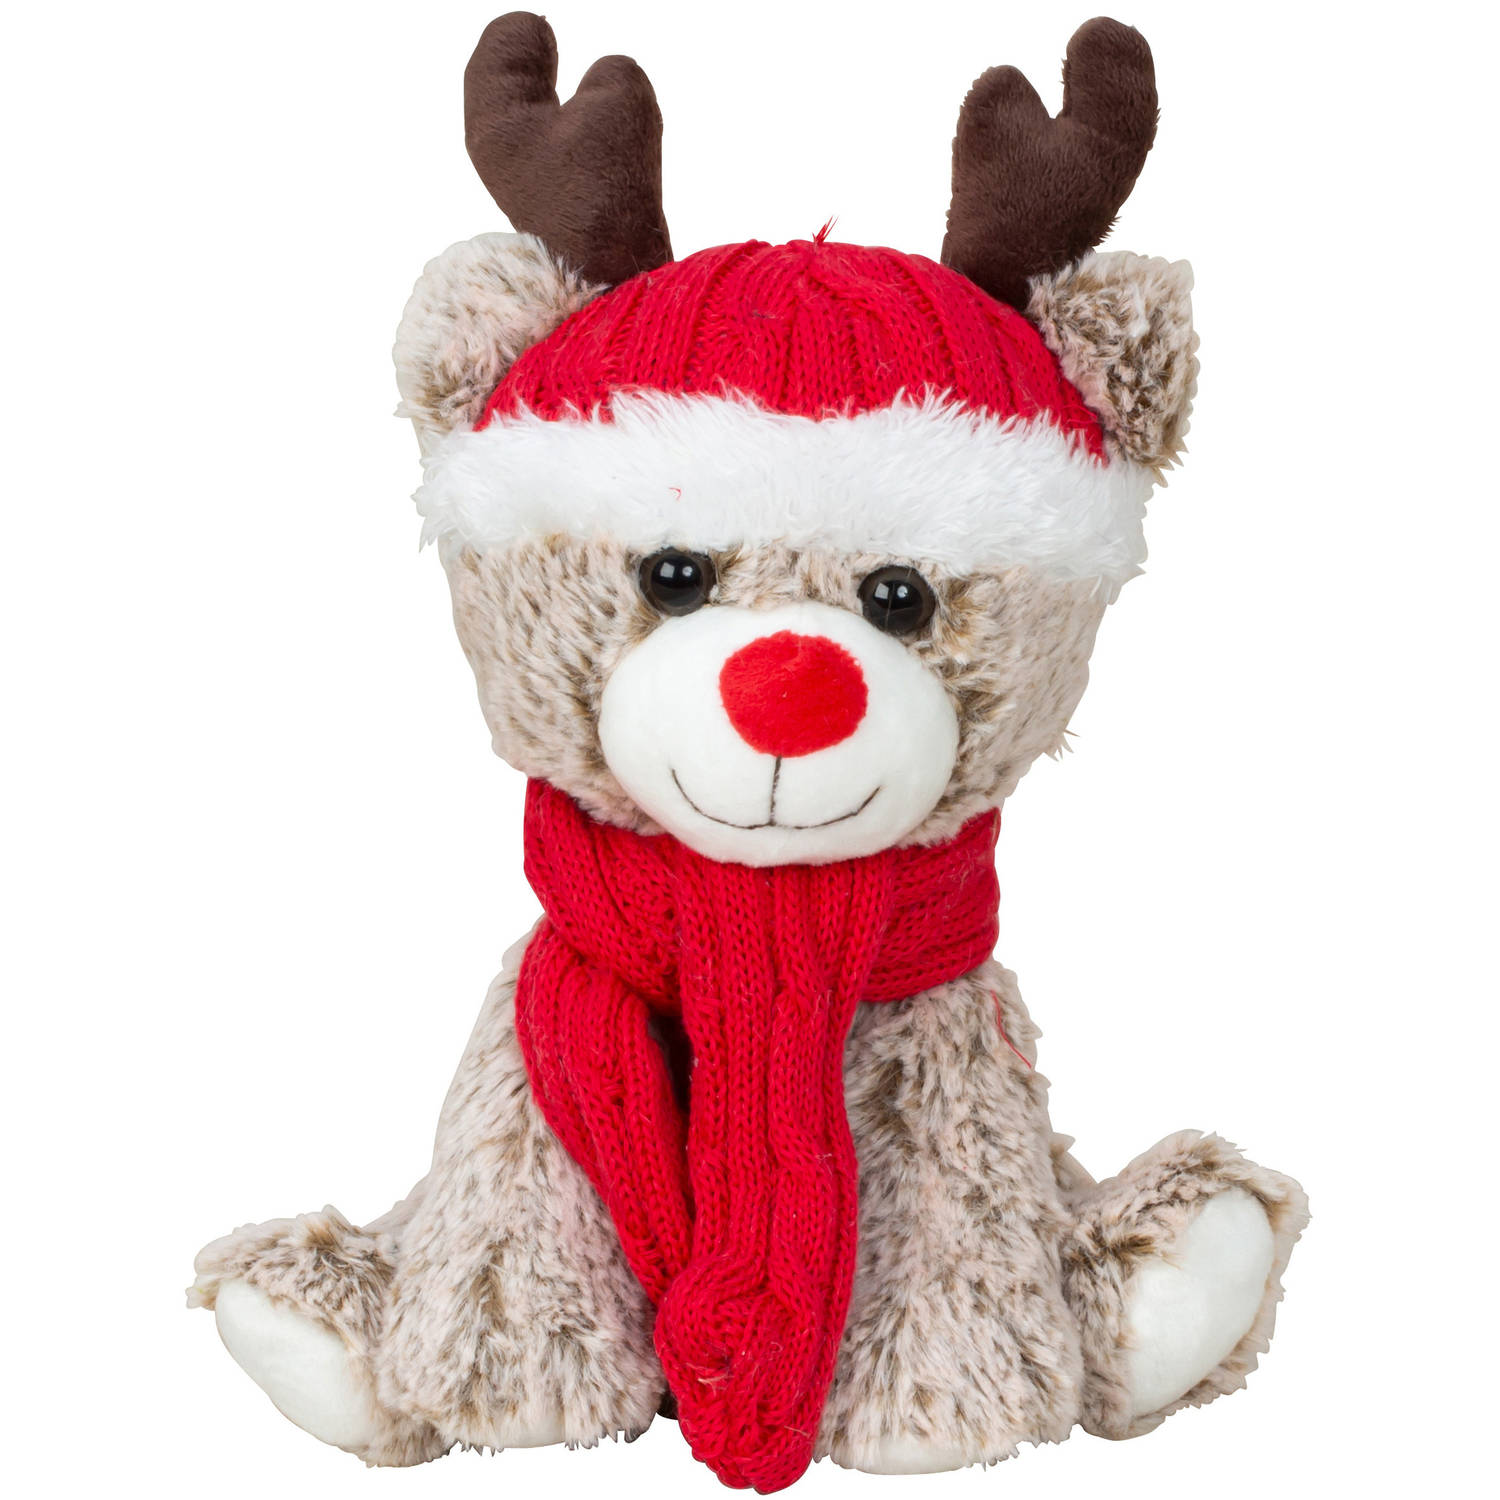 Pluche rendier knuffel - 25 cm - met rode muts en sjaal - knuffeldier